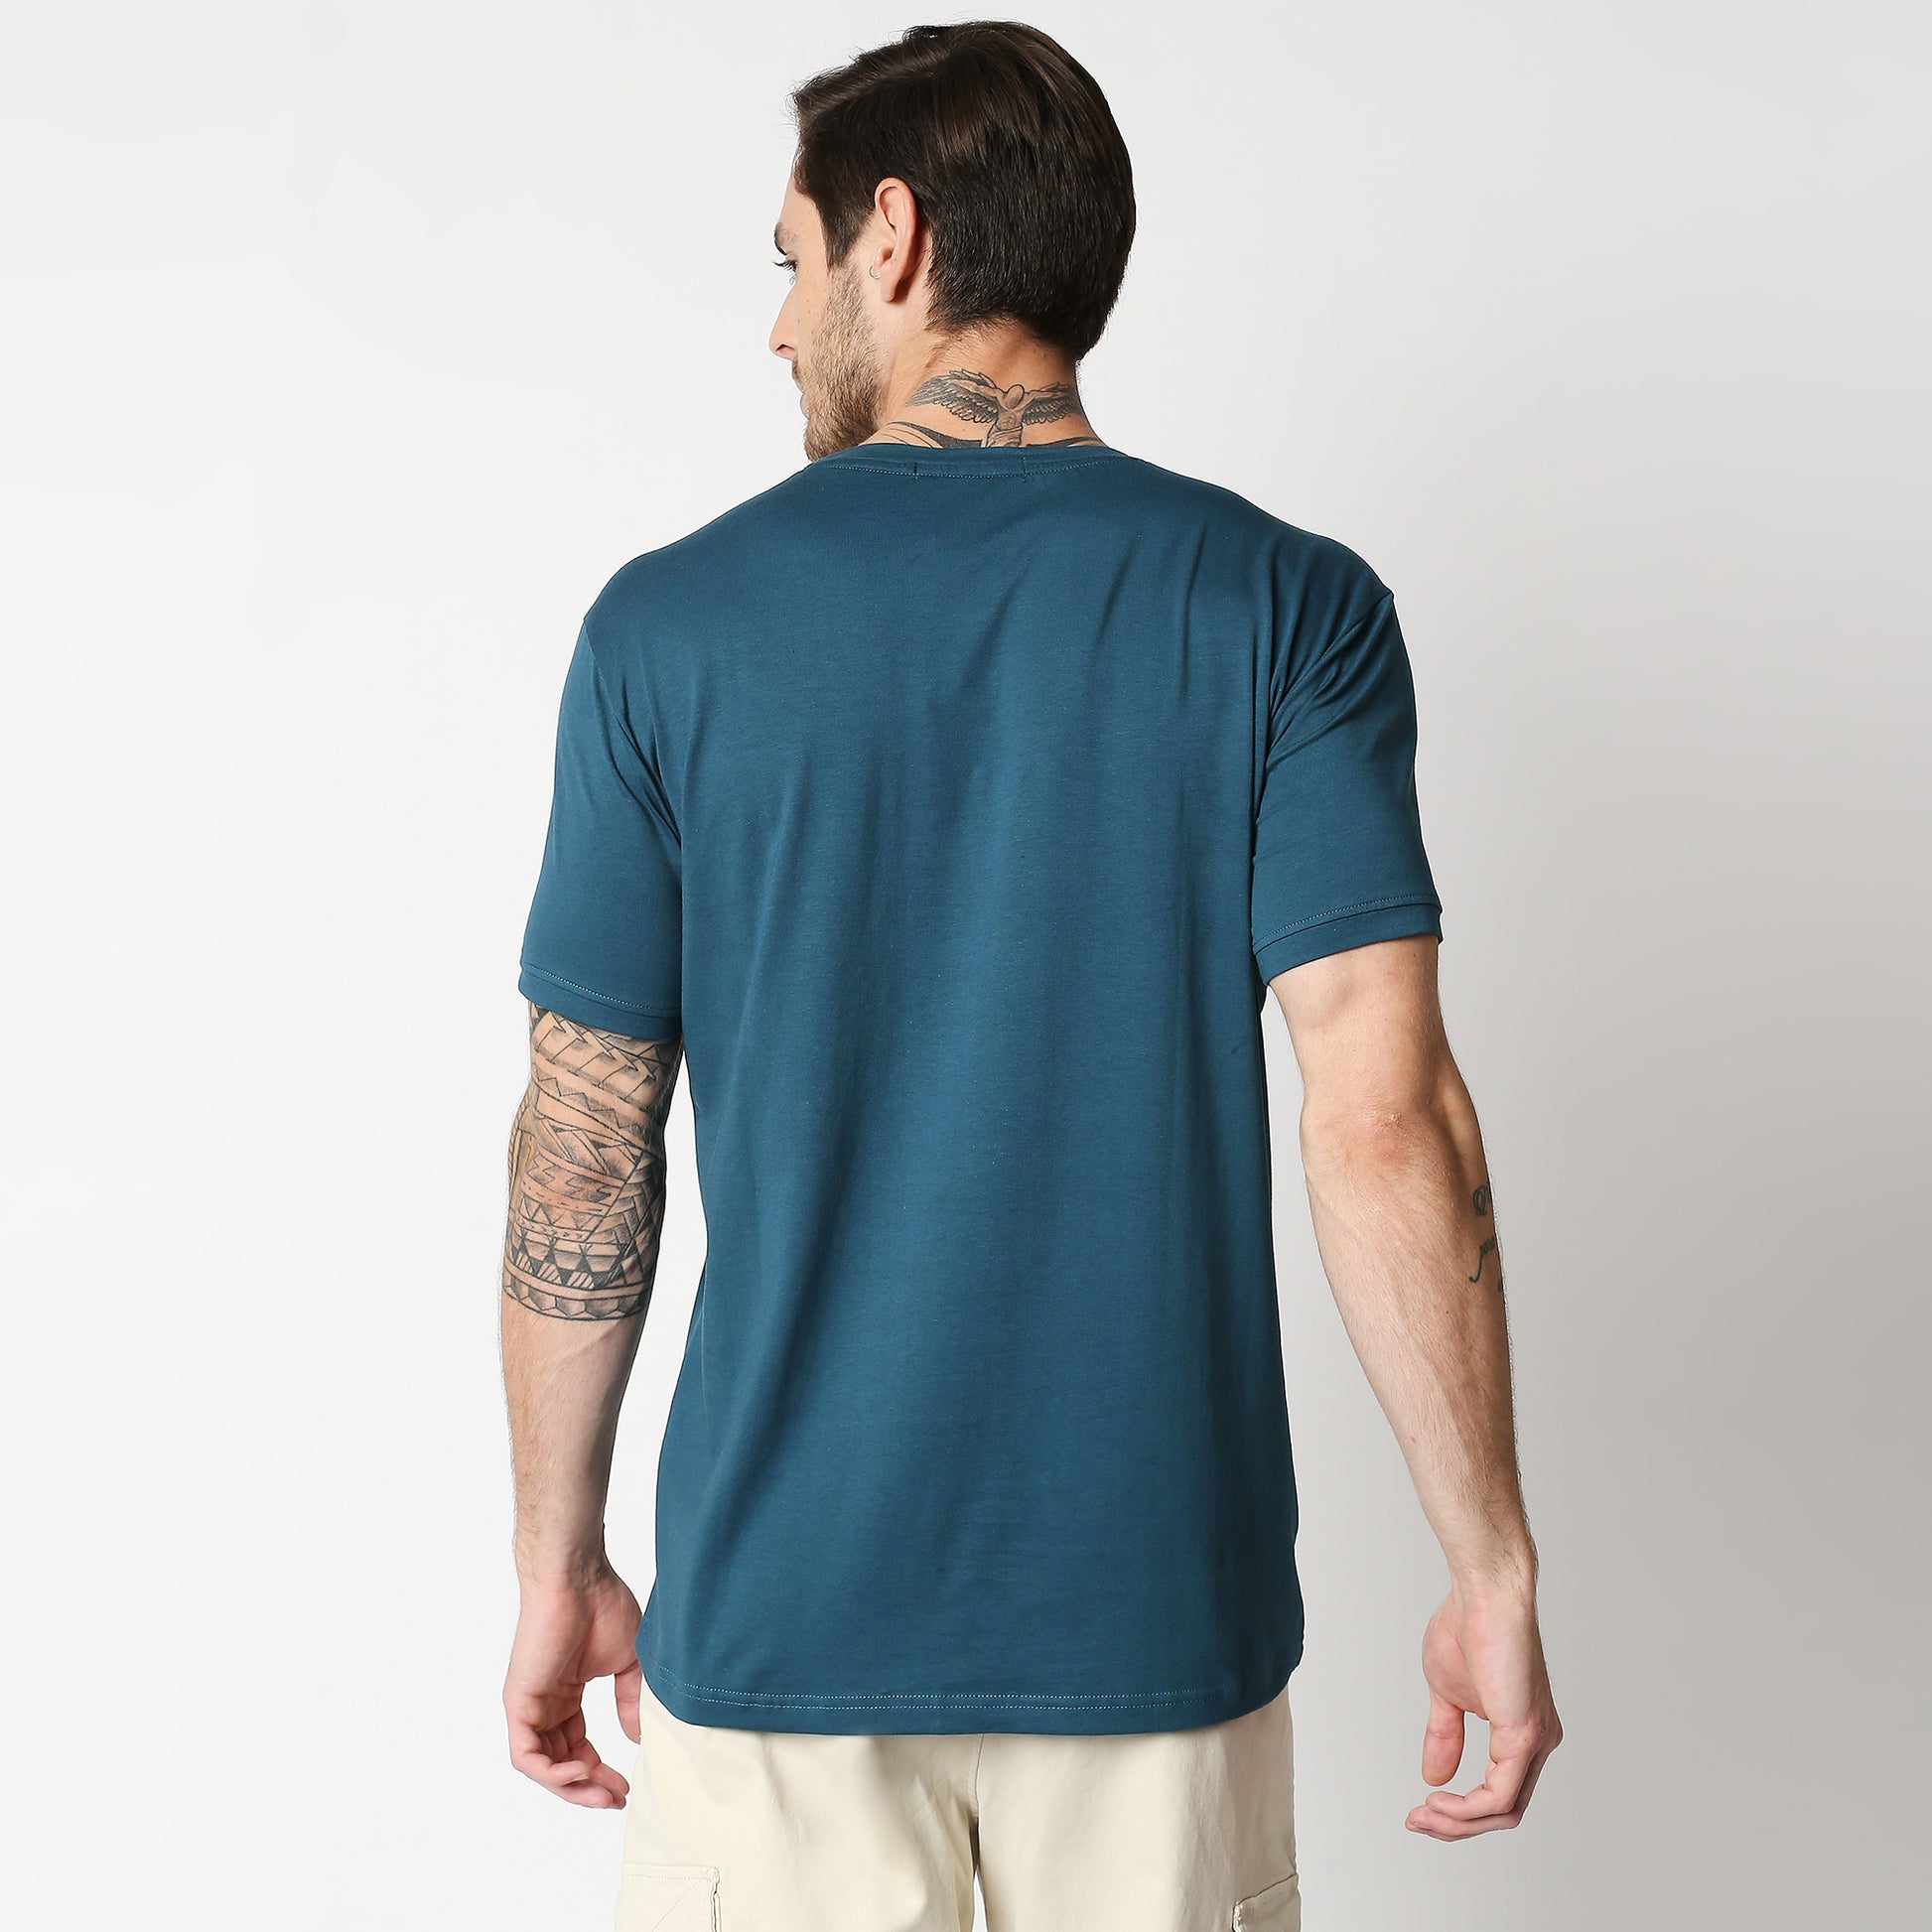 Fostino P1005 Crew-Neck T-shirt +2 colors - Fostino - T-Shirts